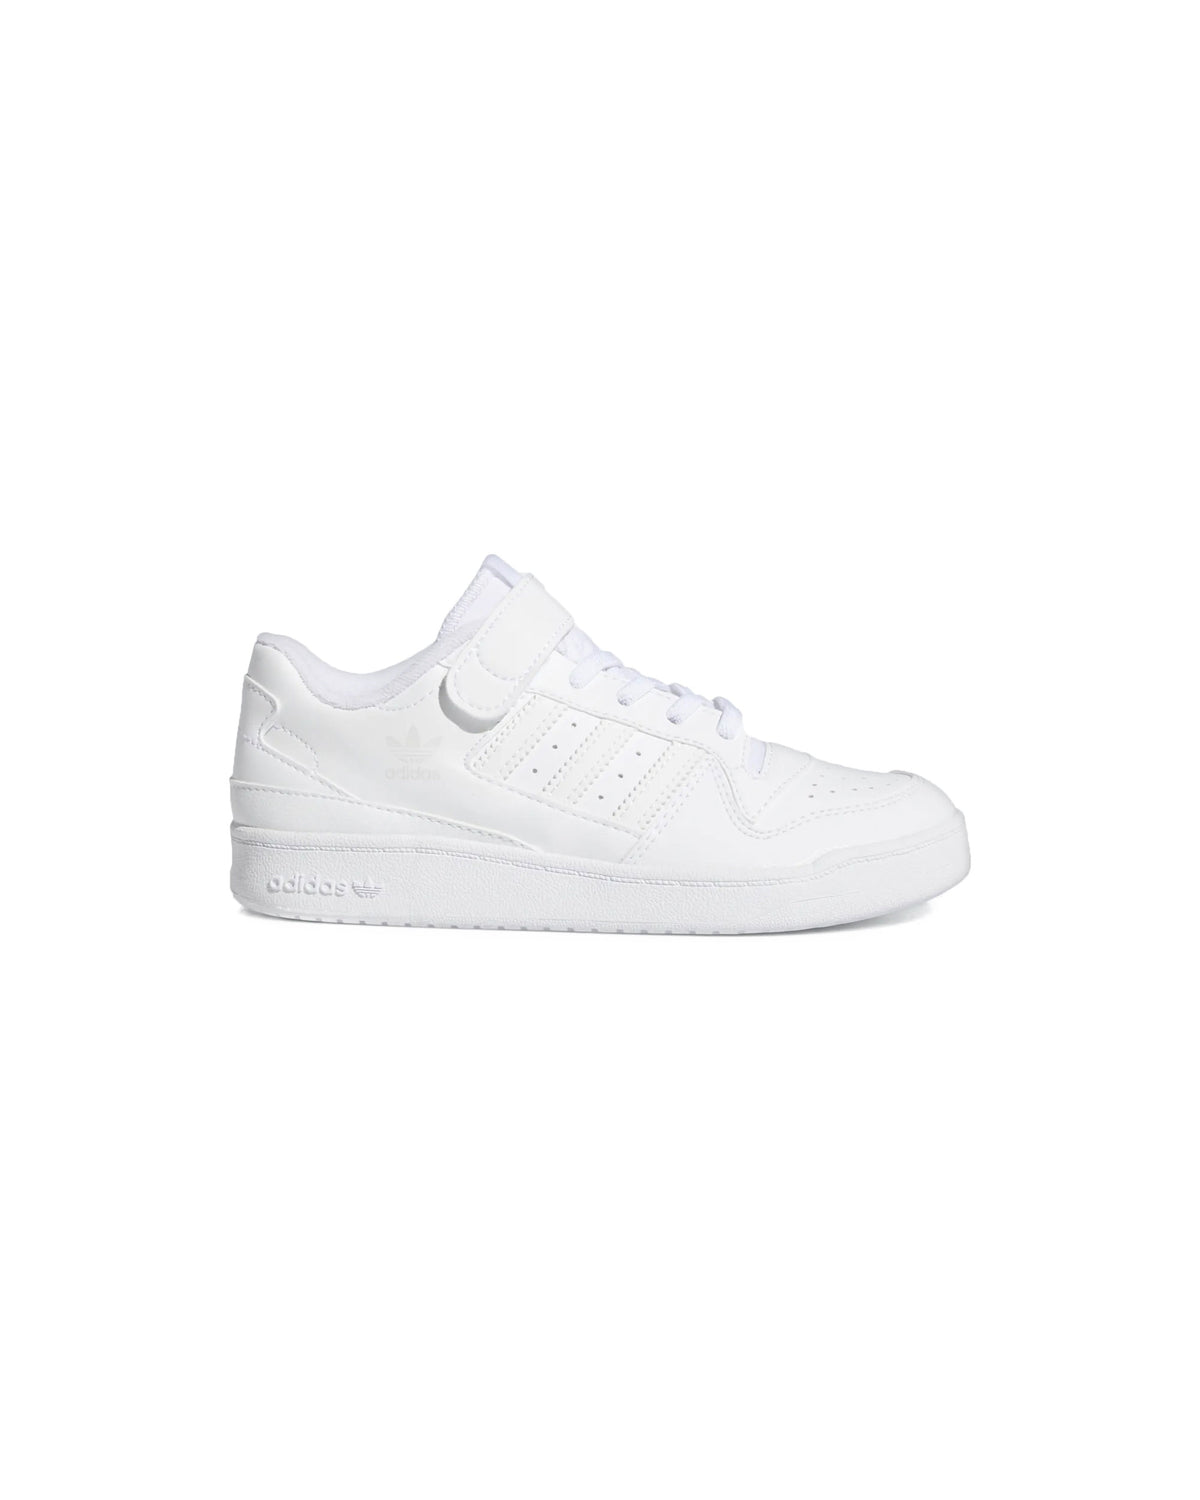 Adidas Forum Low C White